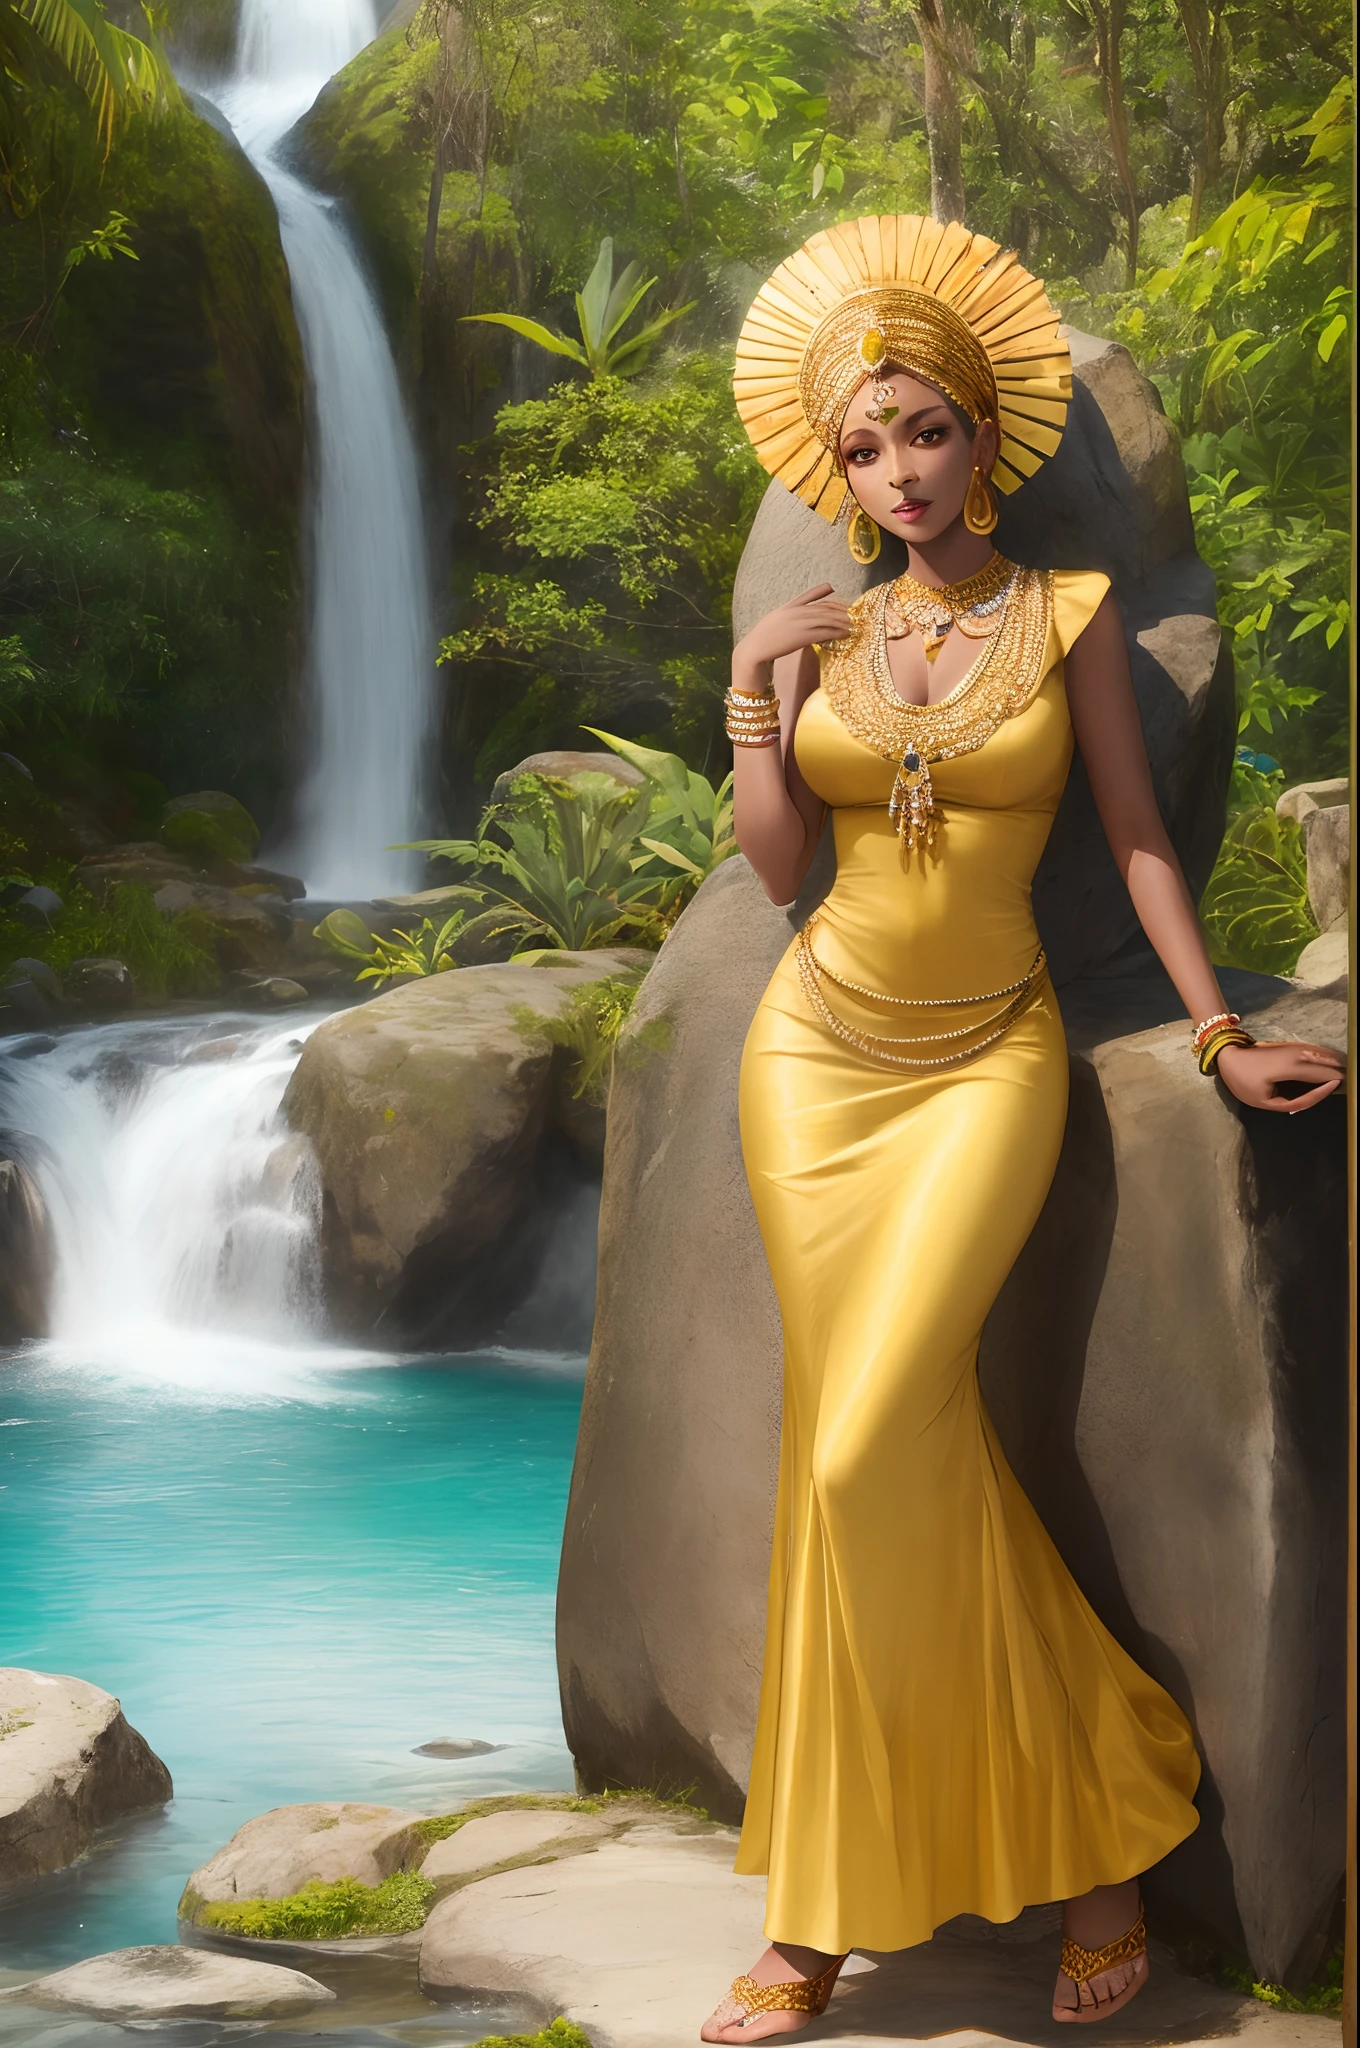 African Woman Goddess Orisha, sitting in a waterfall, wearing a yellow dress holding a mirror